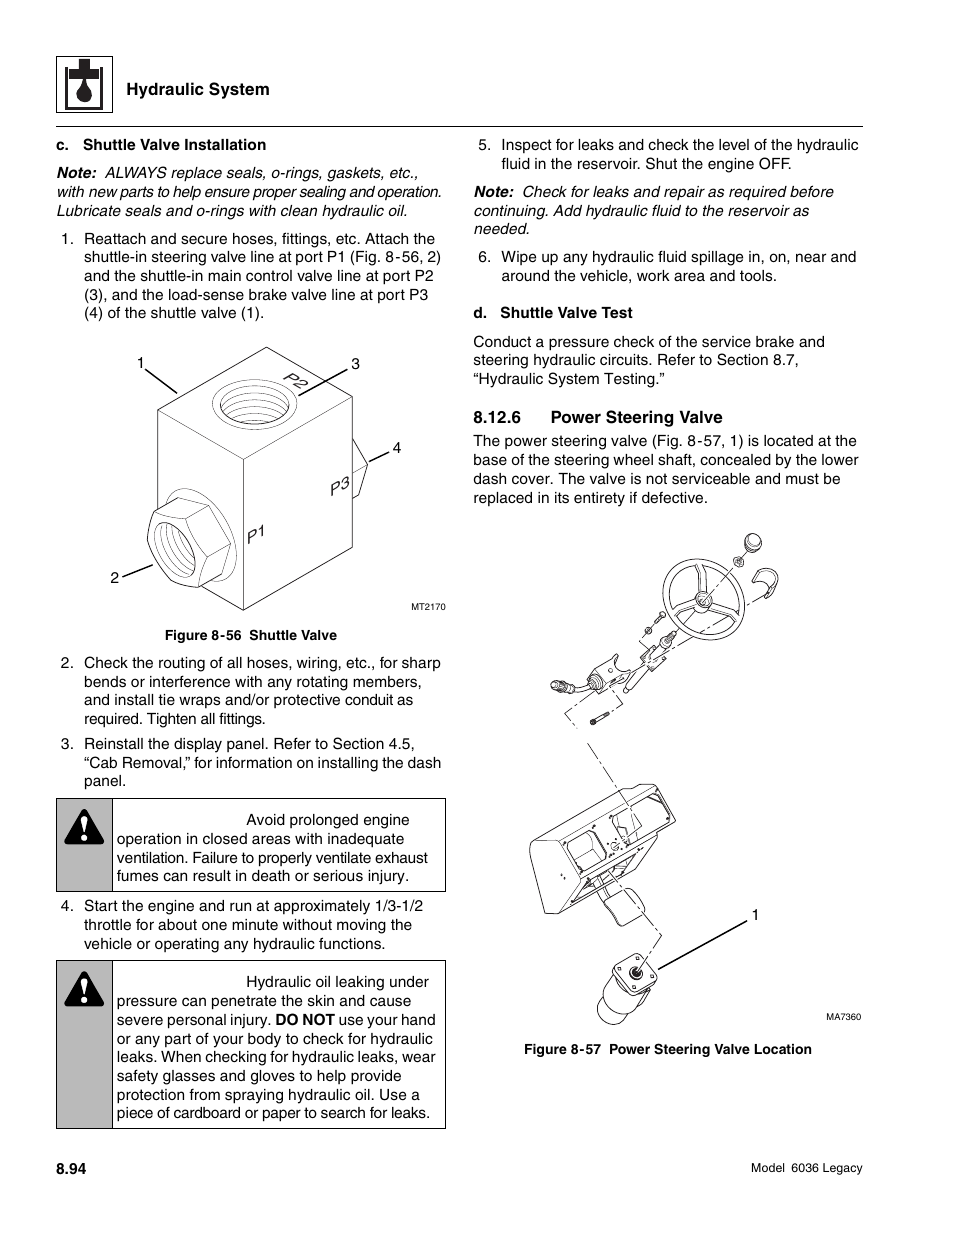 Warning | SkyTrak 6036 Service Manual User Manual | Page 310 / 460